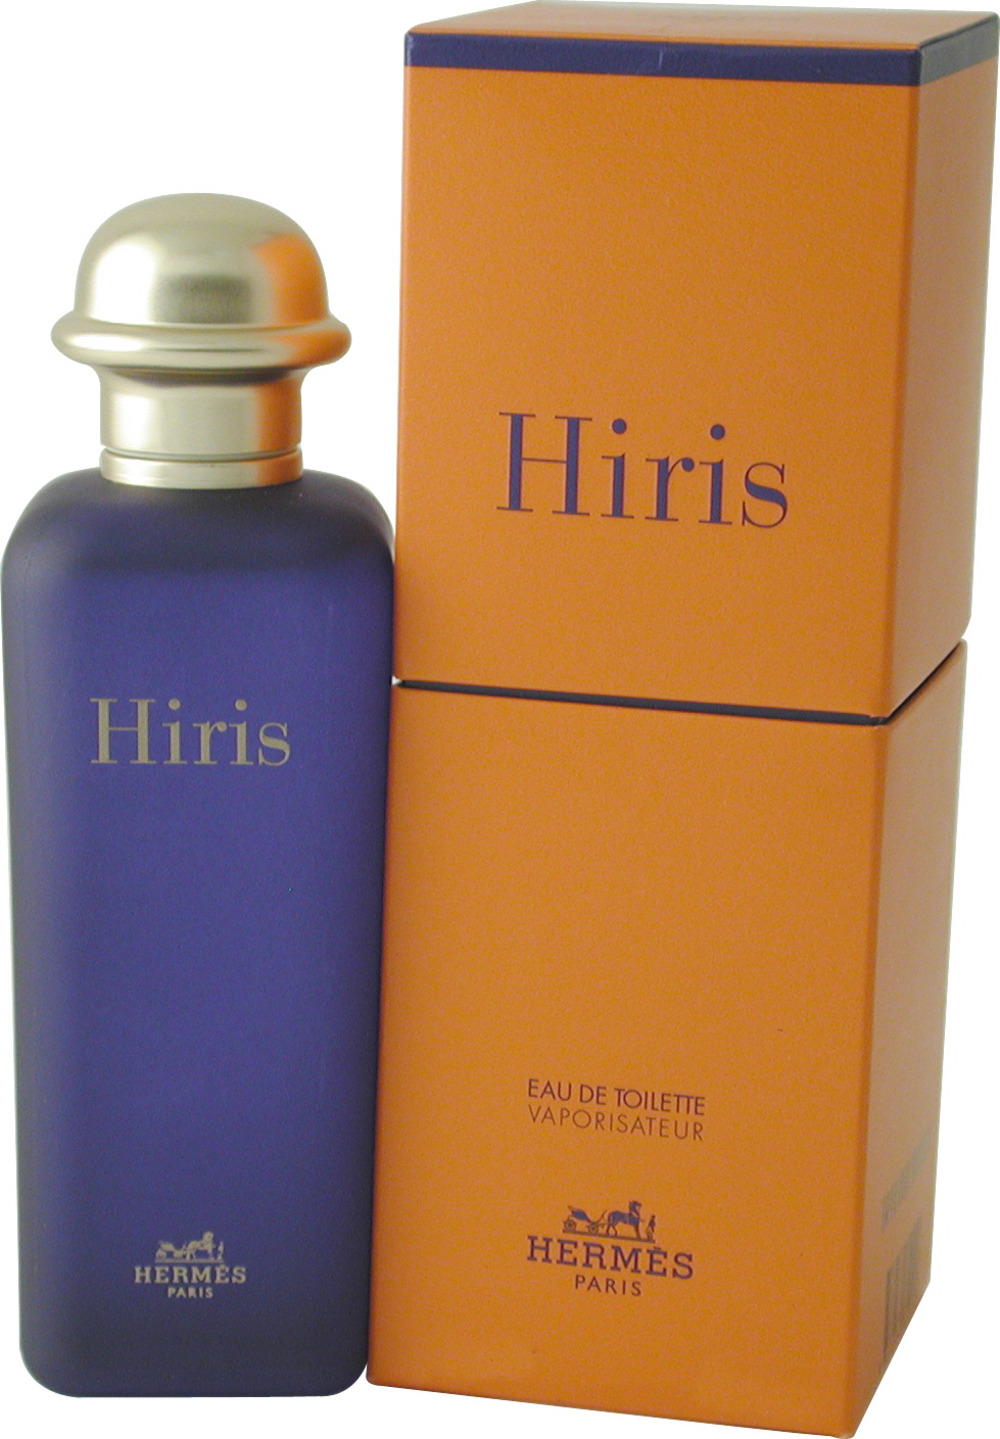 Hiris by Hermes Fragrance Review | Eau Talk - The Official FragranceNet.com  Blog